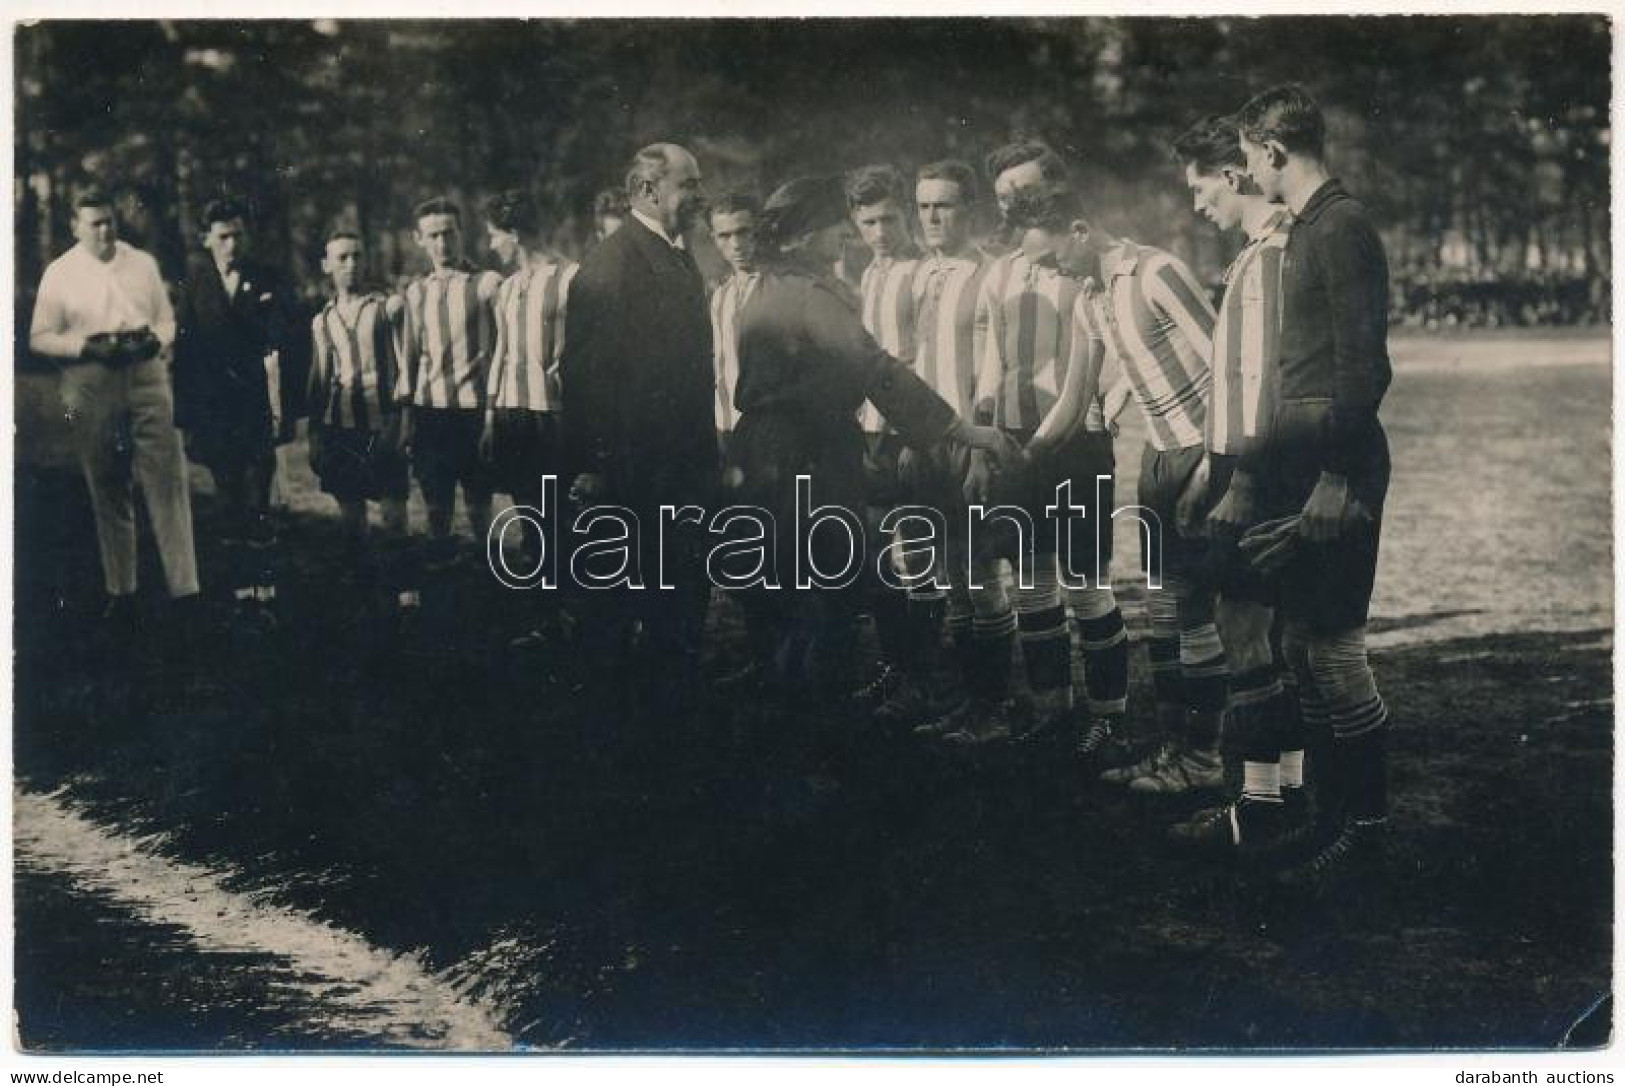 * T2/T3 1922 Futballisták, Foci / Football Team, Football Players. Photo (EK) - Unclassified